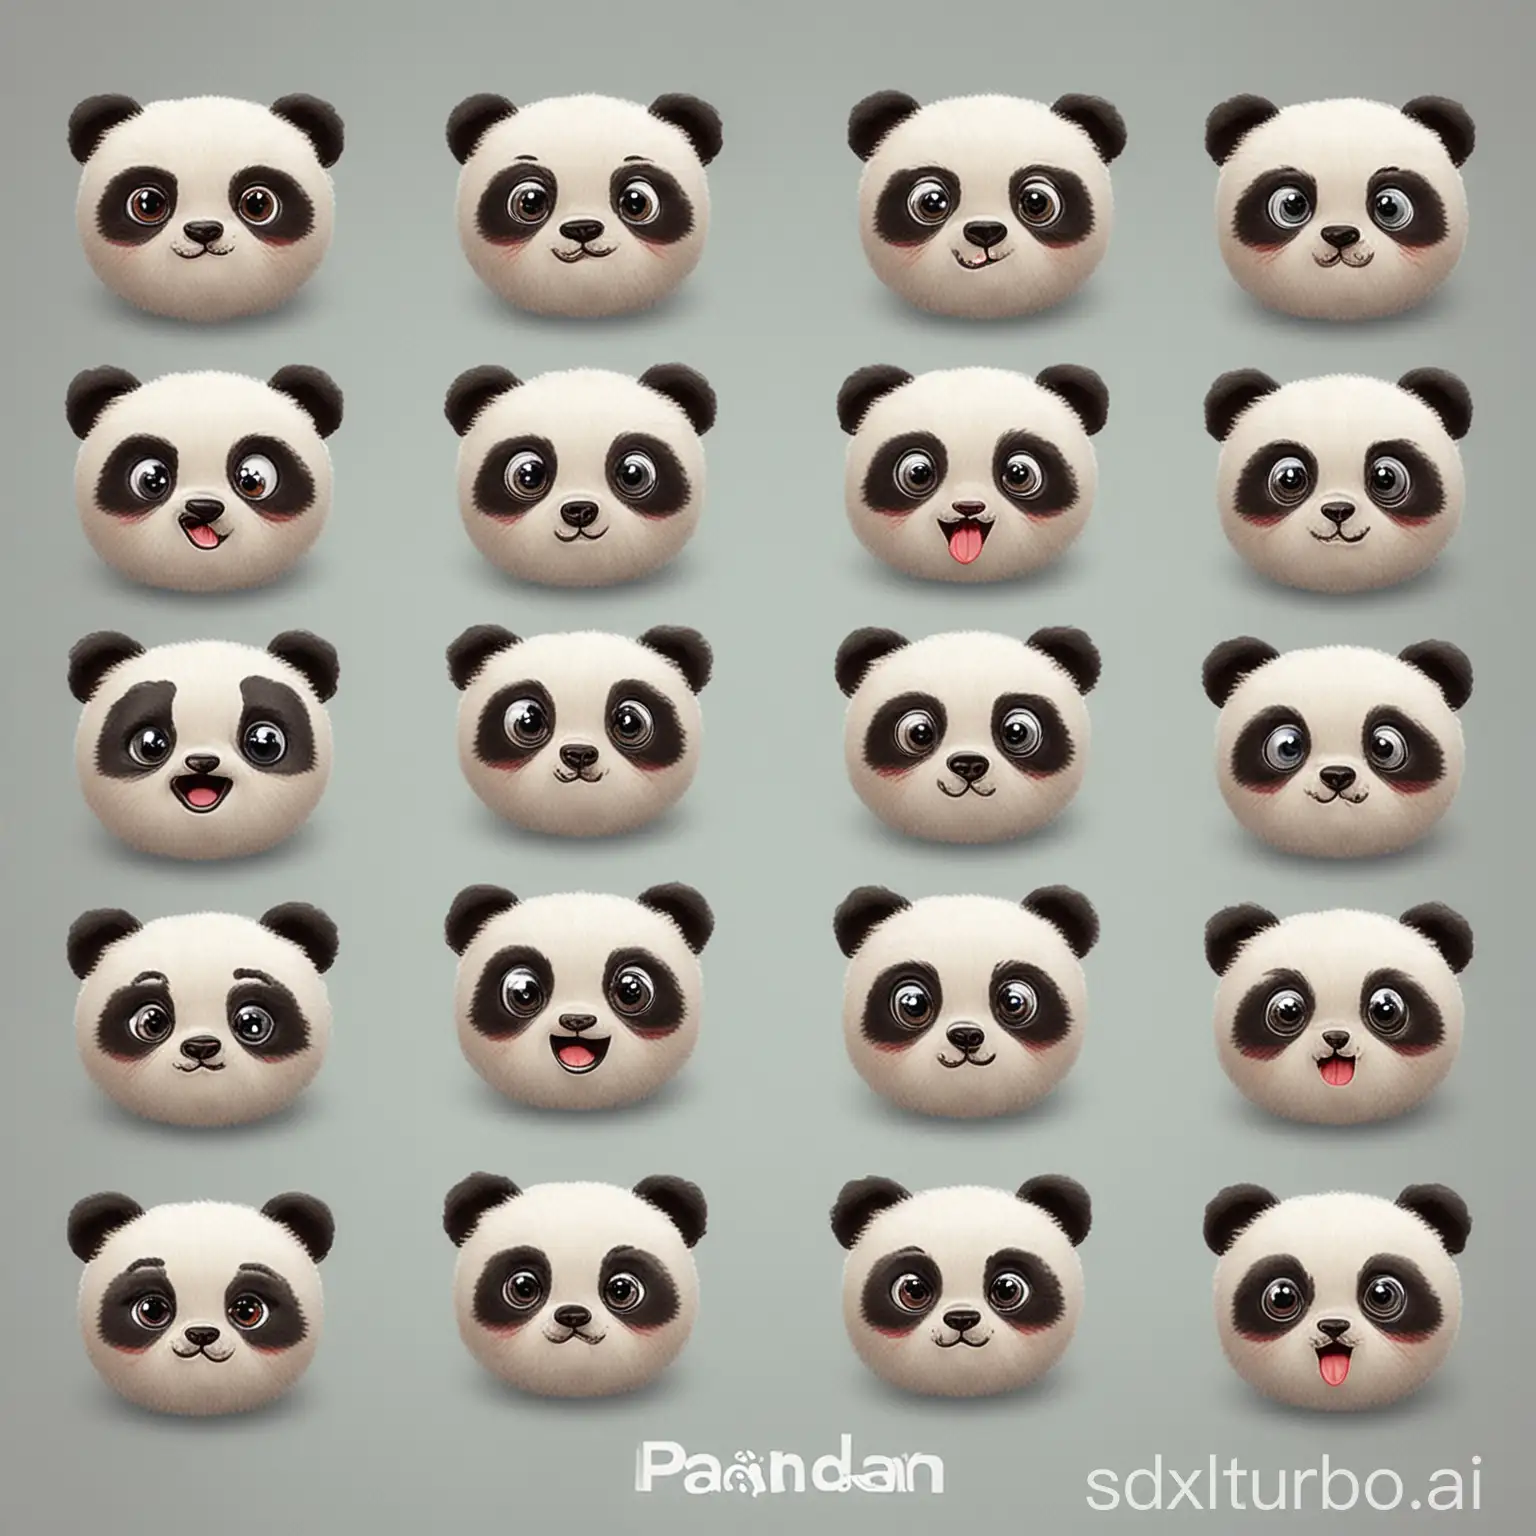 Panda emoji pack with captions